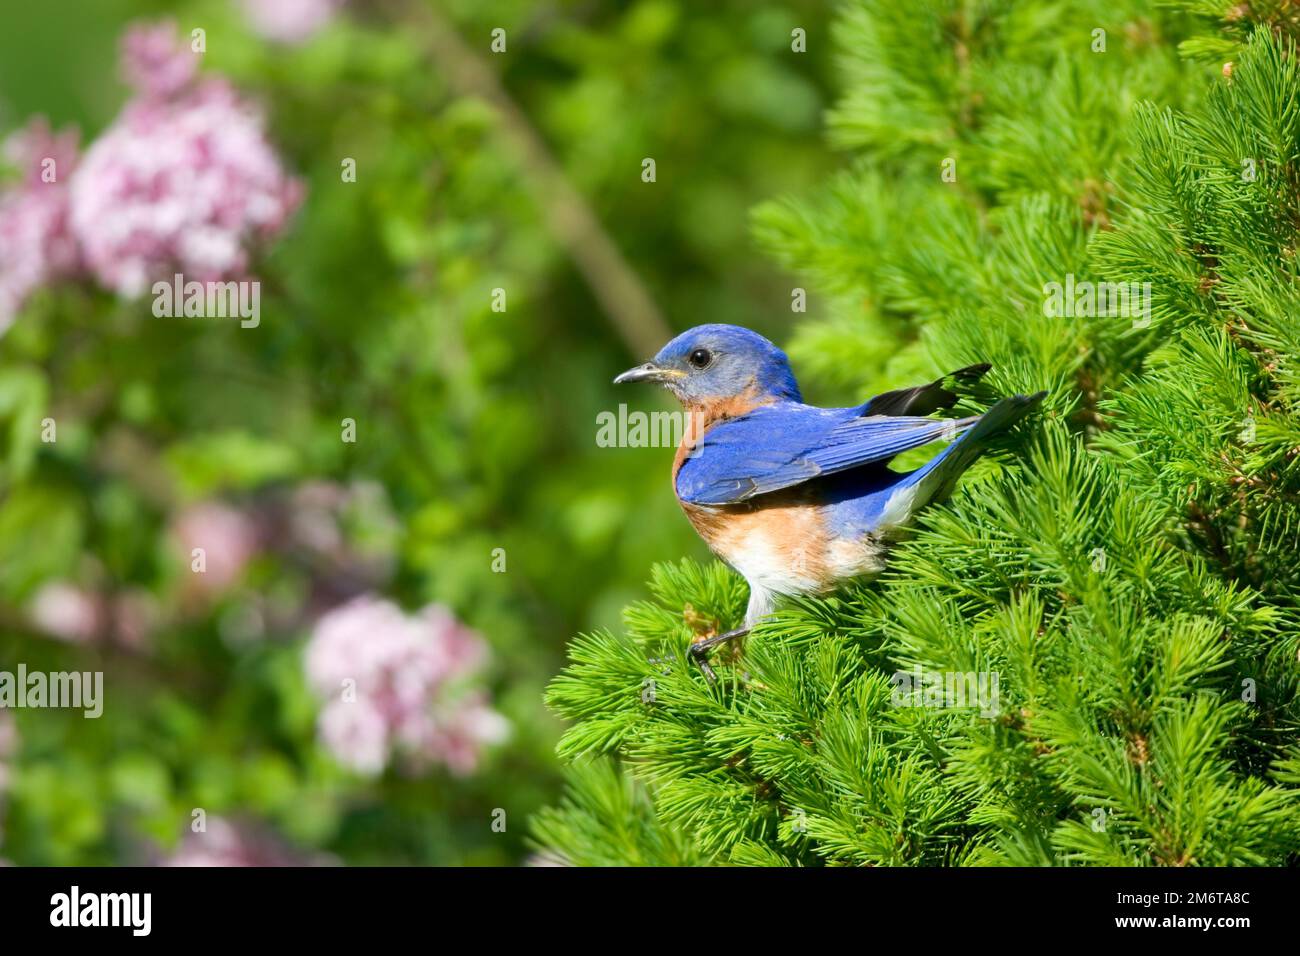 01377-160.08 Eastern Bluebird (Sialia sialis) male in Dwarf Alberta Spruce near Lilac bush, Marion Co. IL Stock Photo